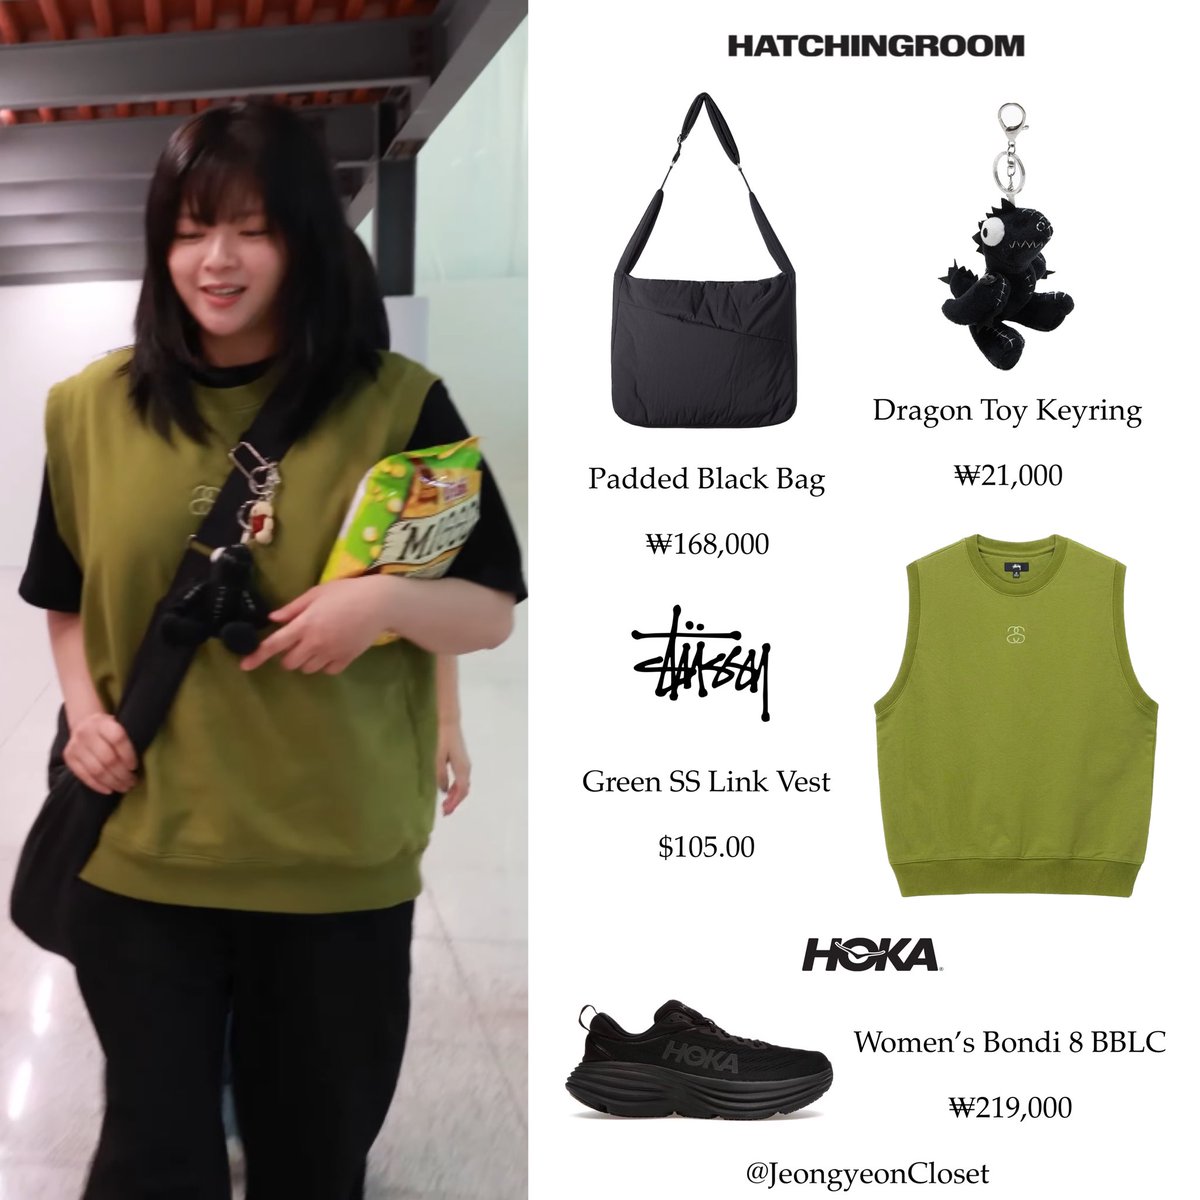 Jeongyeon at Incheon Airport 240531

STÜSSY Vest
HATCHINGROOM Bag & Keyring
HOKA Sneakers

#정연 #정연패션 #ジョンヨン #JEONGYEON #JeongyeonCloset